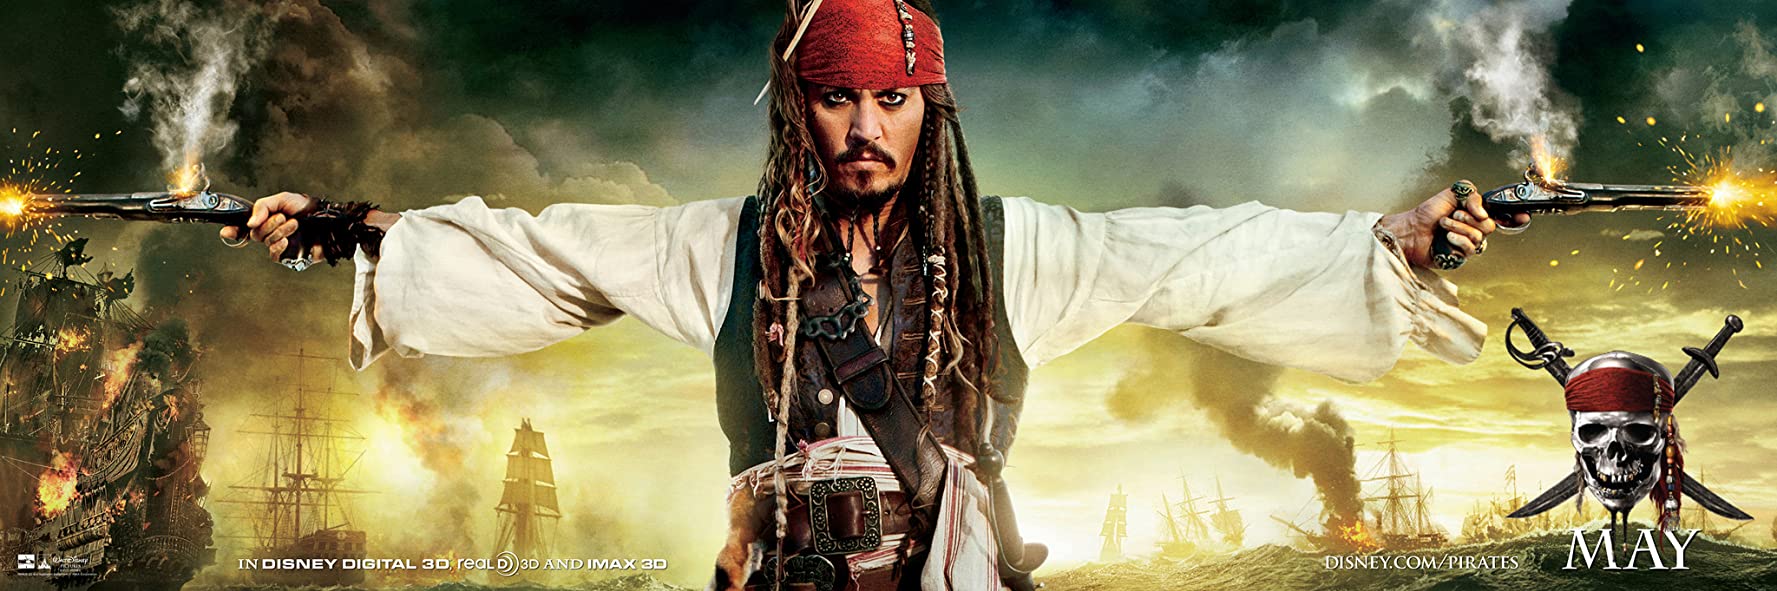 Pirates of Caribbean 1st movie